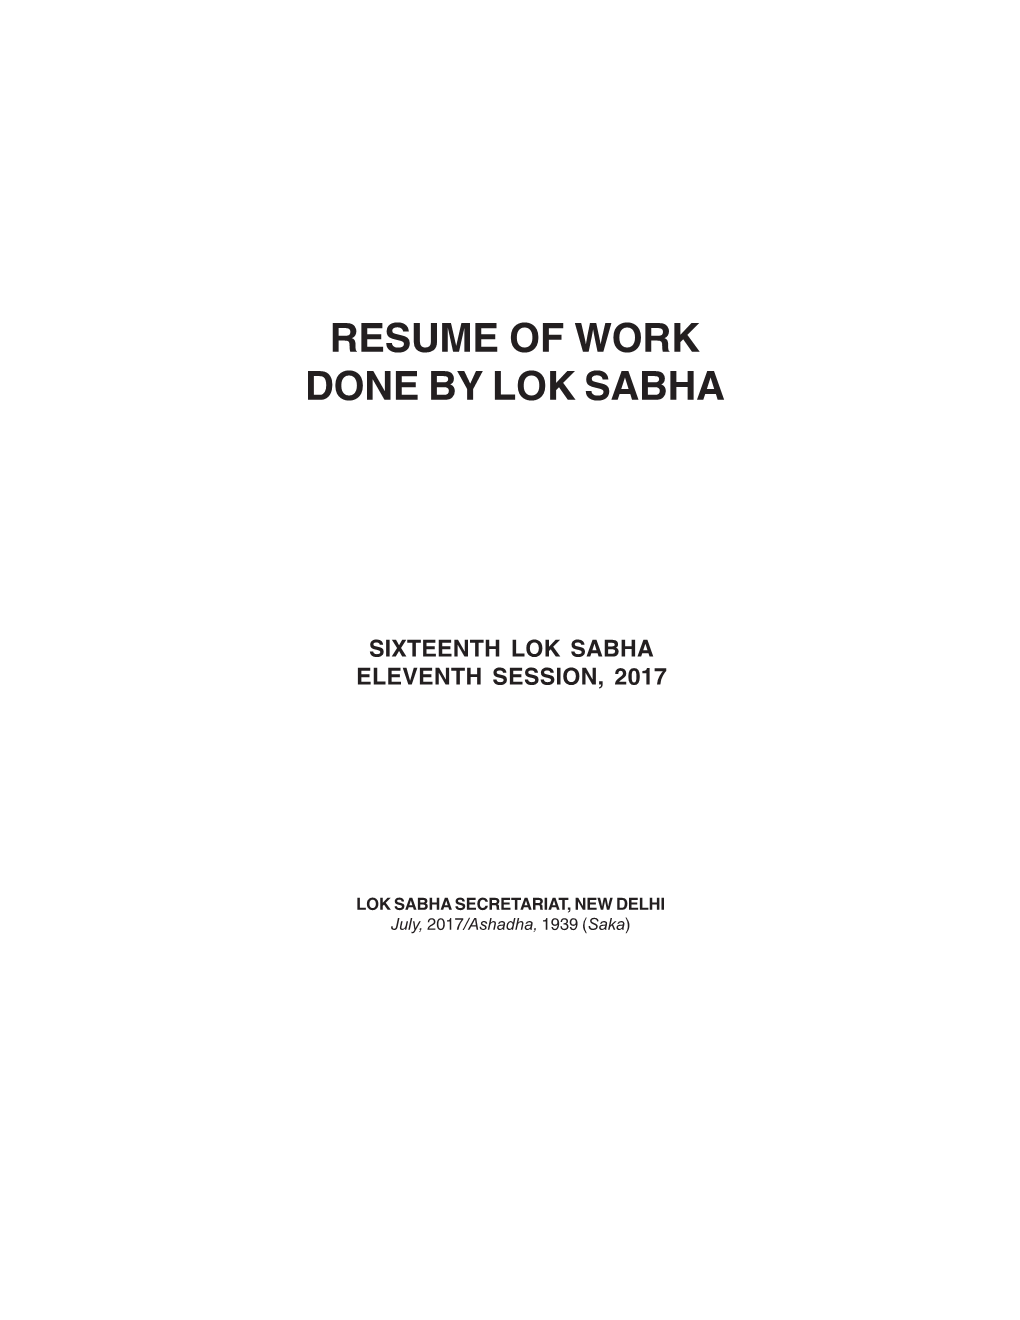 Resume of Work Done by Lok Sabha